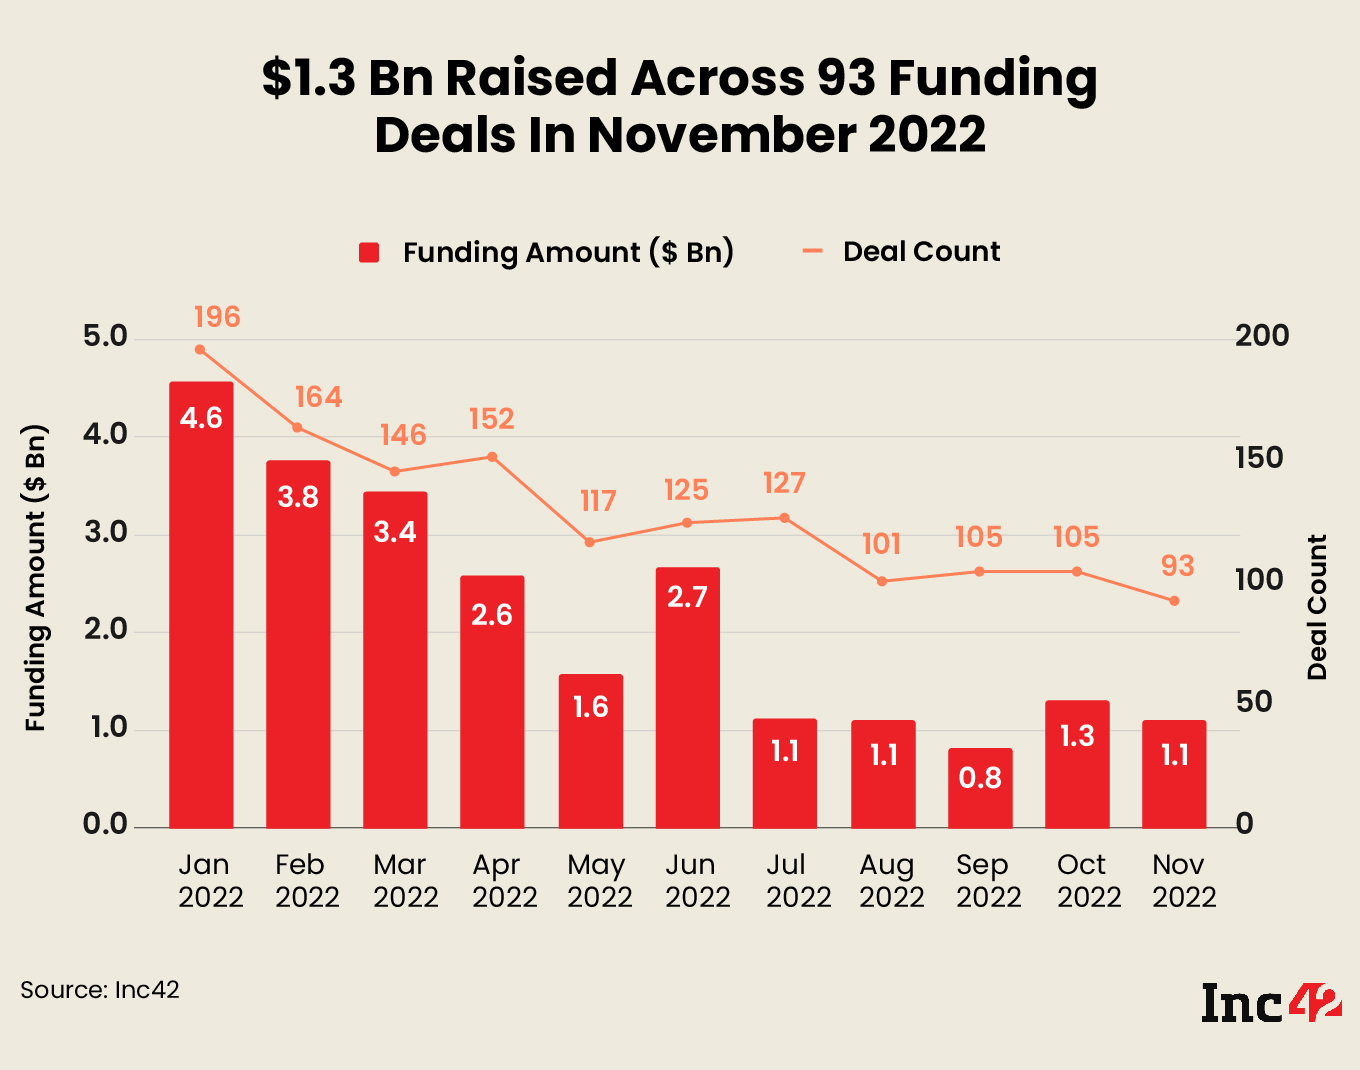 November 2022 Funding reached $1.3 Bn